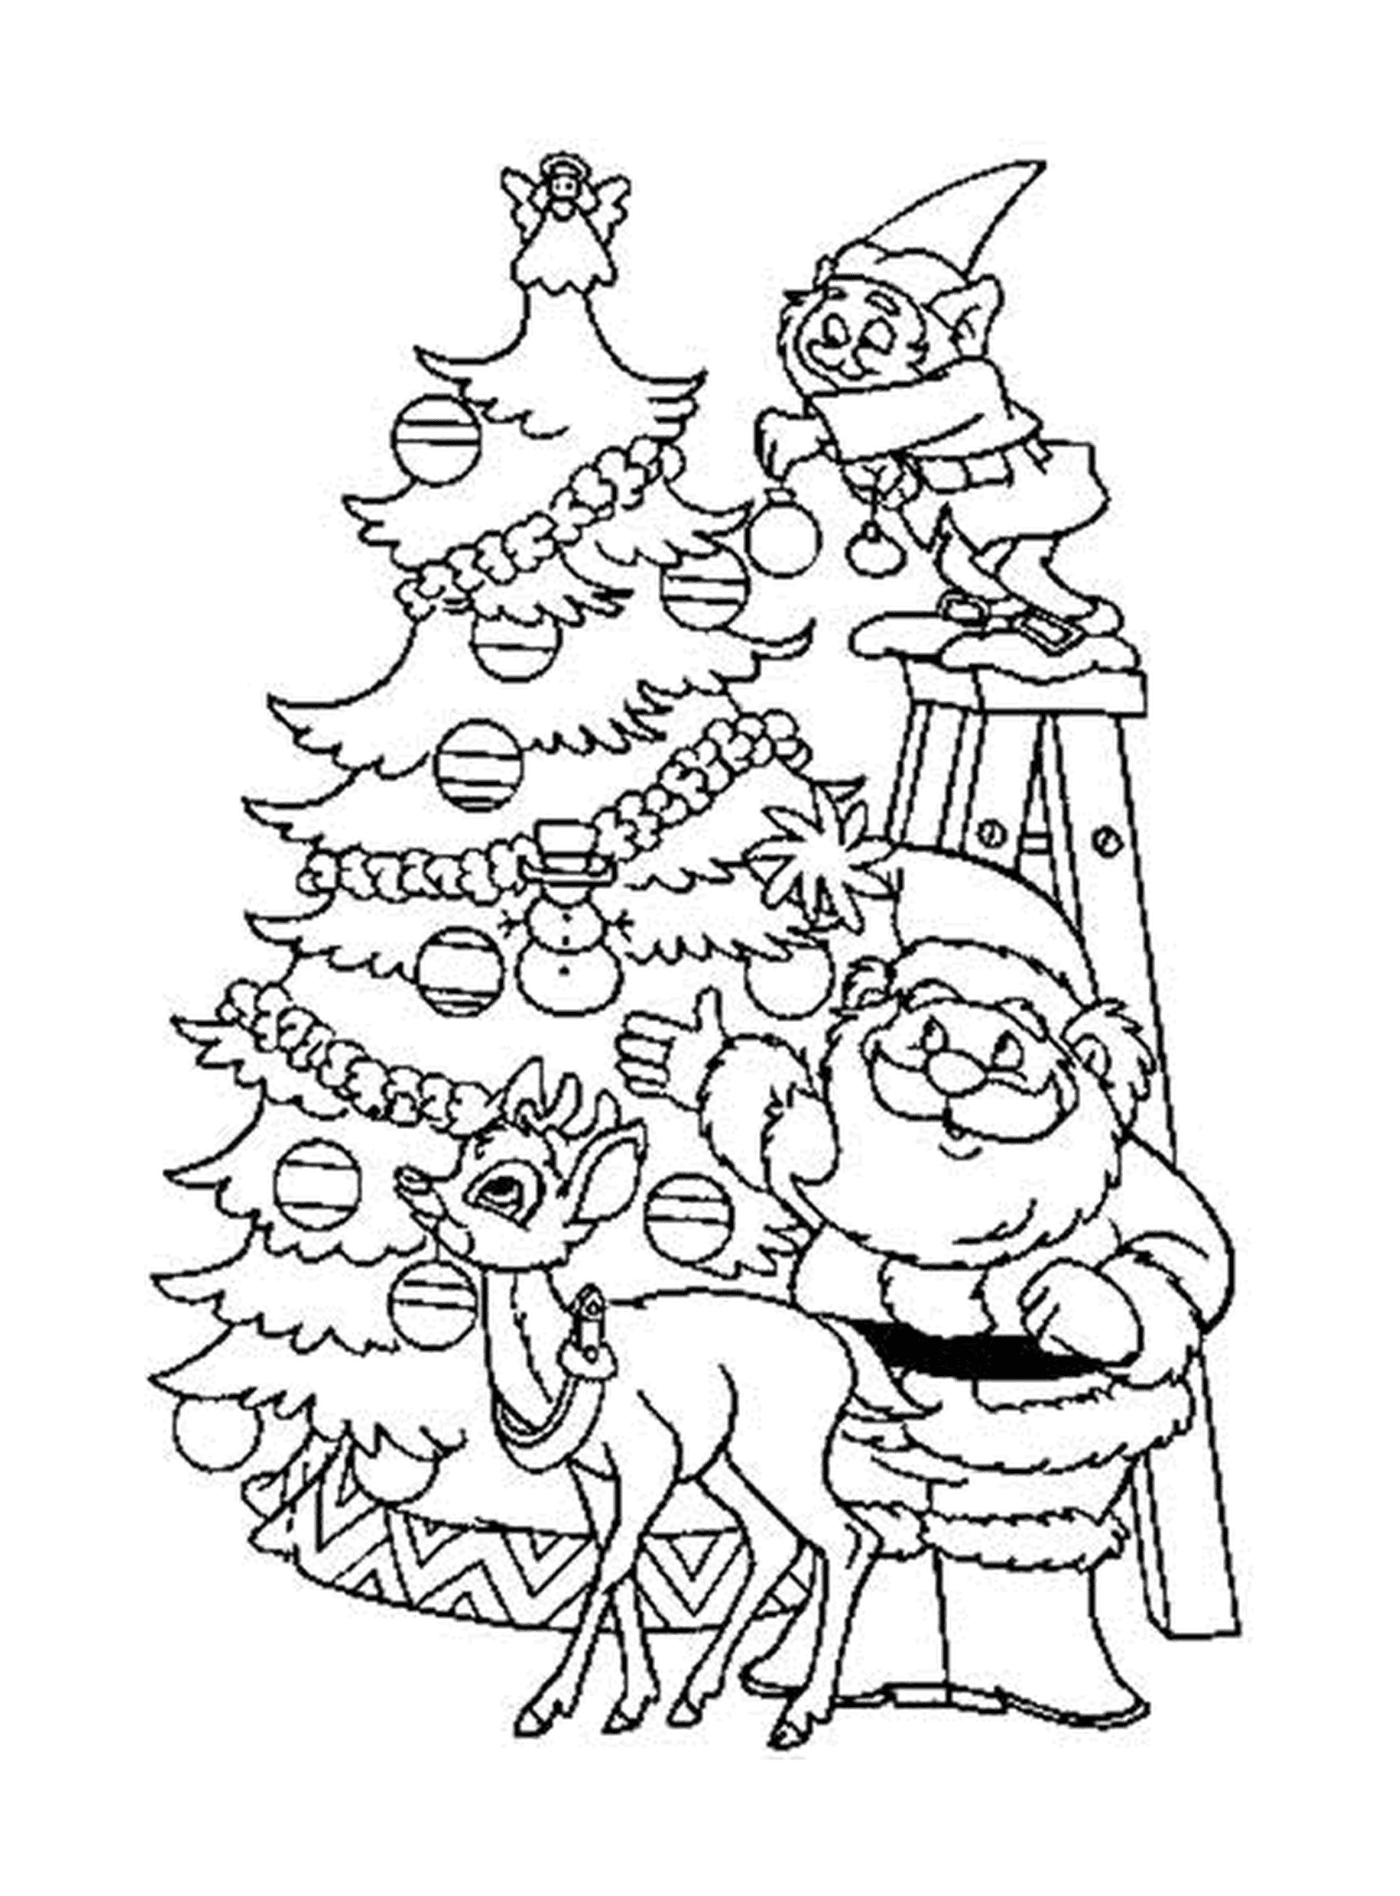  Papai Noel, rena e alce decorando uma árvore bonita 